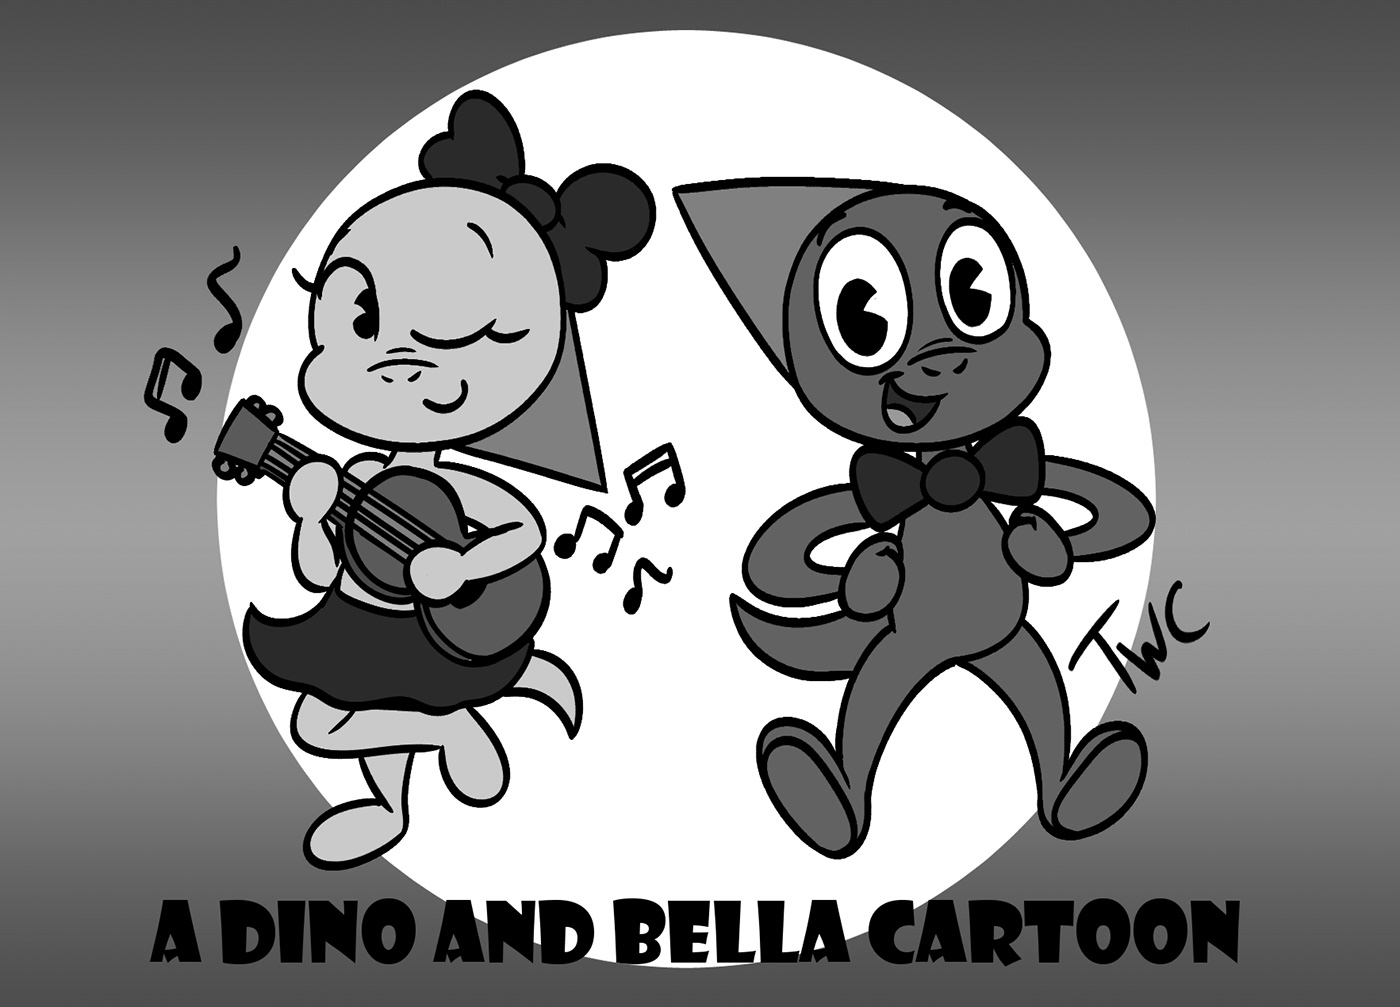 Bella cartoon Dino dinosaurs